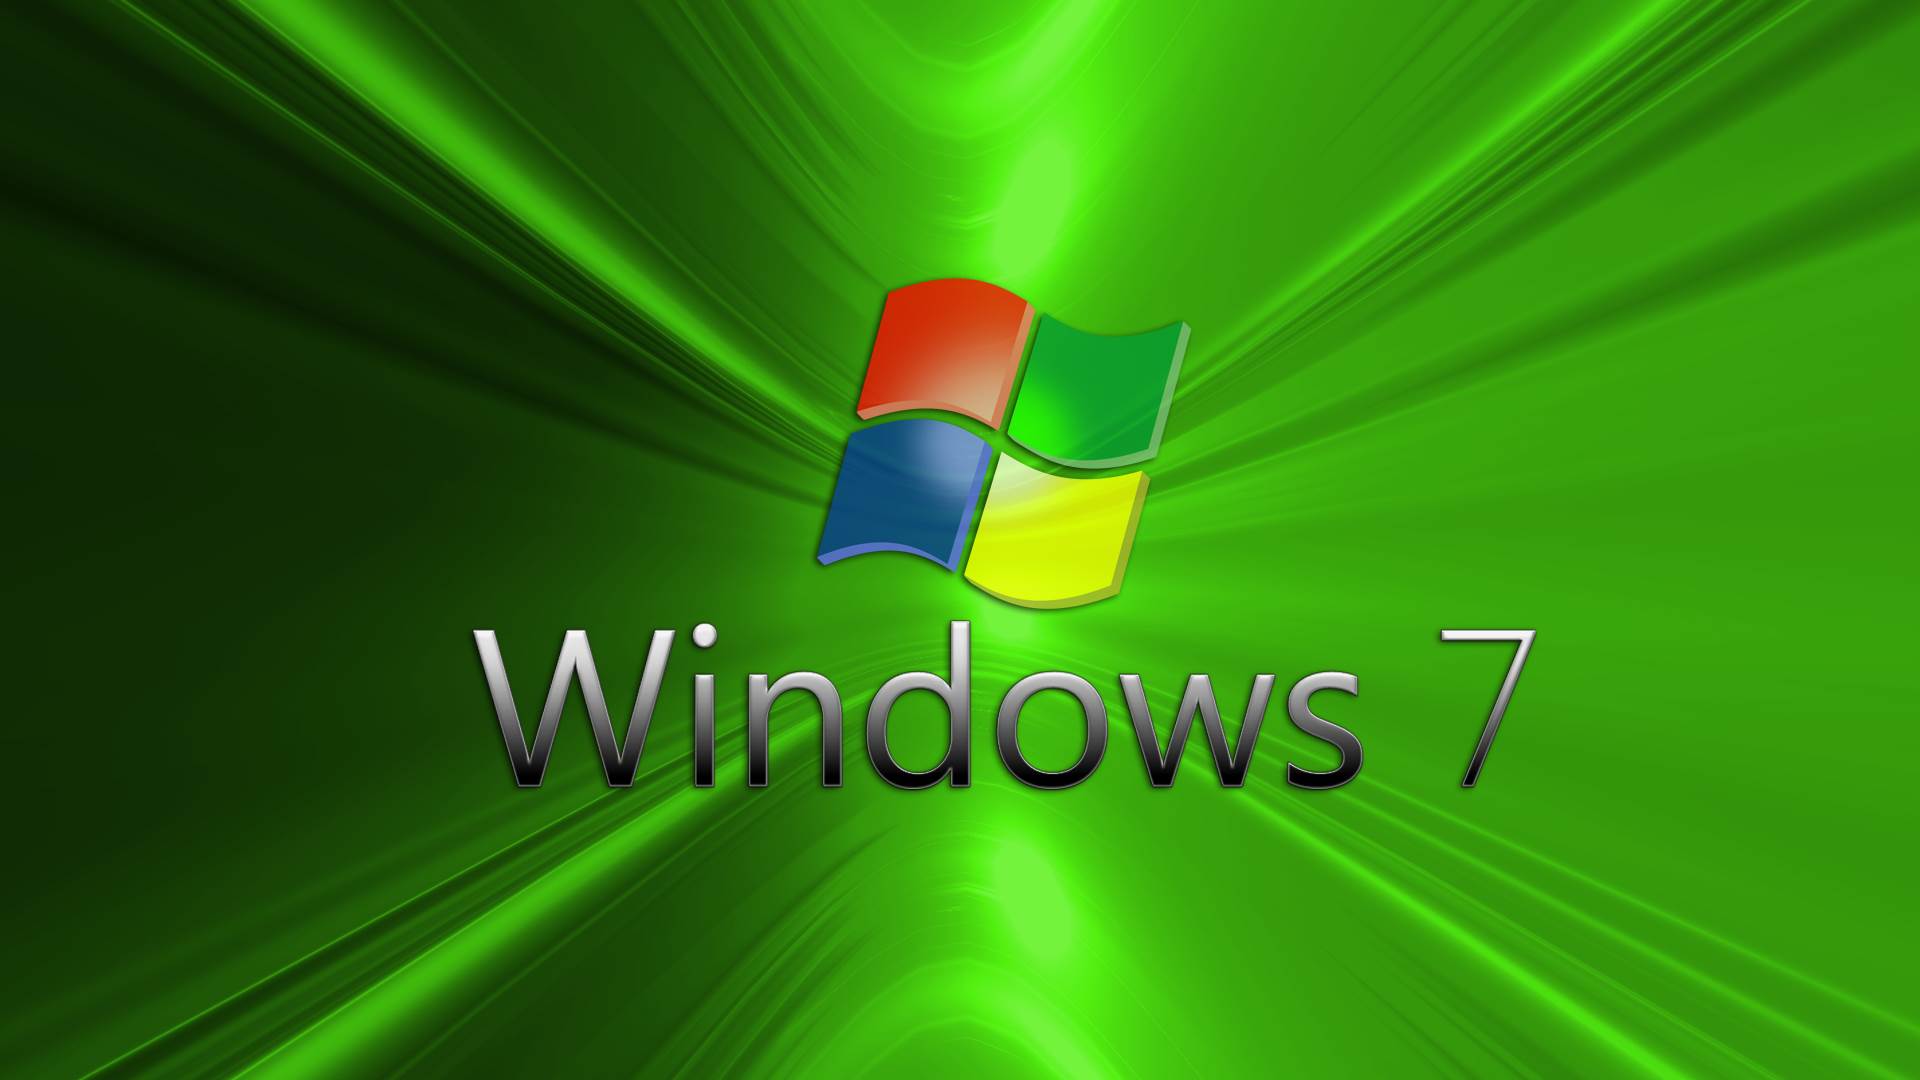 Сборки вин 7. Картинки Windows 7. Windows 7 рабочий стол. Заставка Windows 7. Обои на рабочий стол виндовс 7.